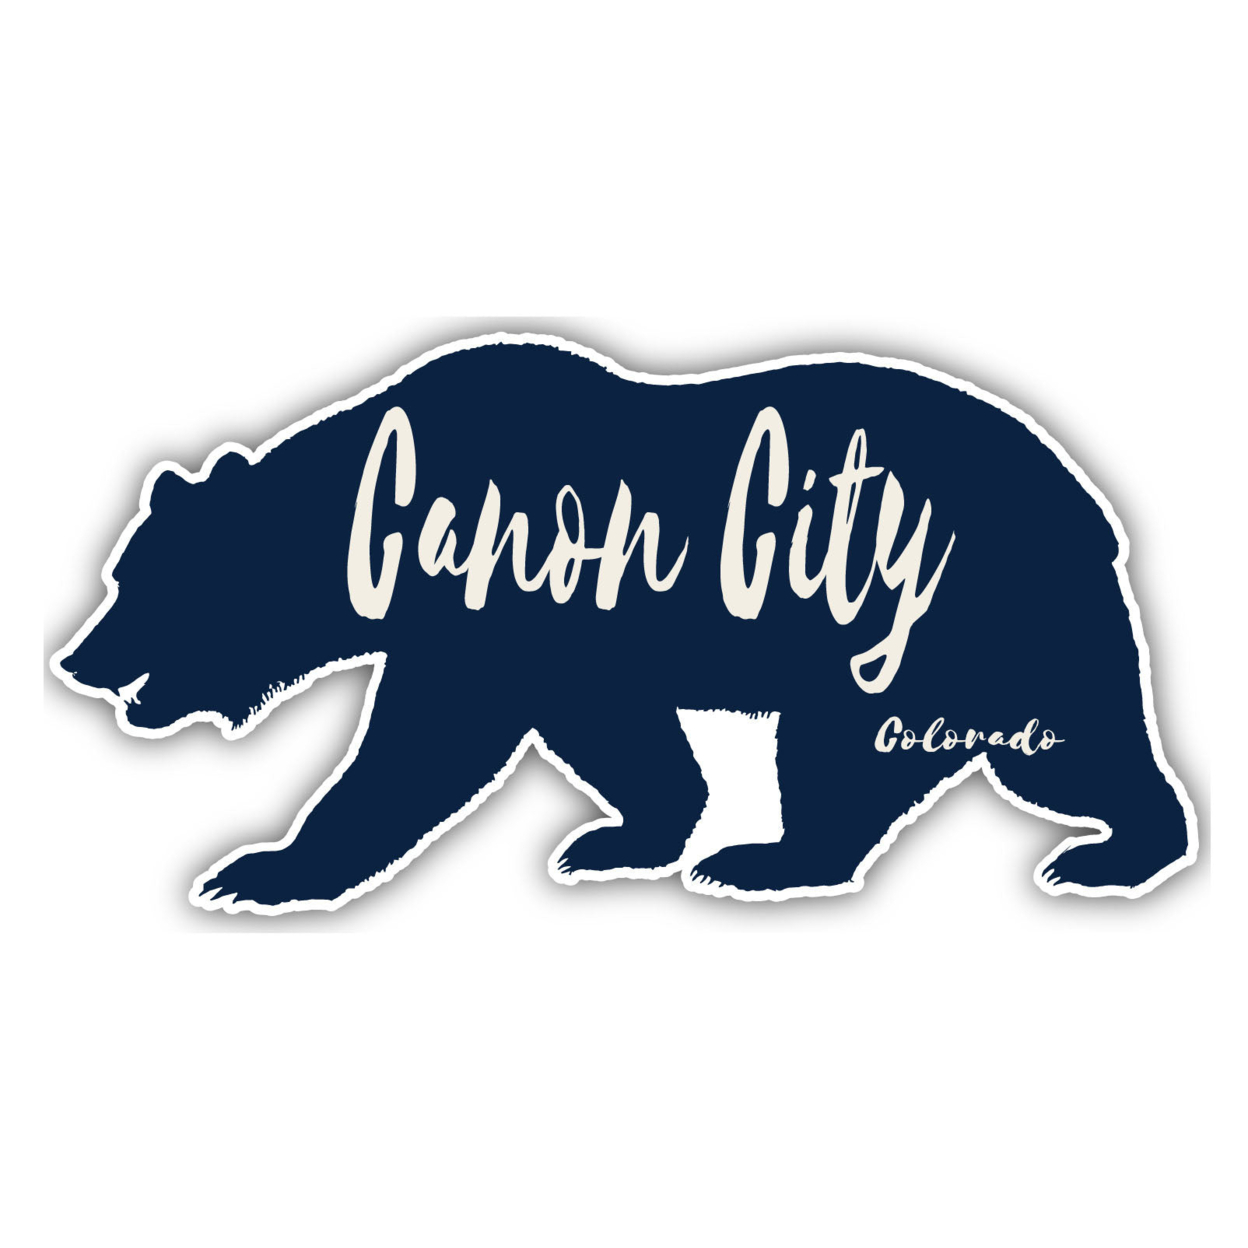 Canon City Colorado Souvenir Decorative Stickers (Choose Theme And Size) - 4-Pack, 10-Inch, Bear